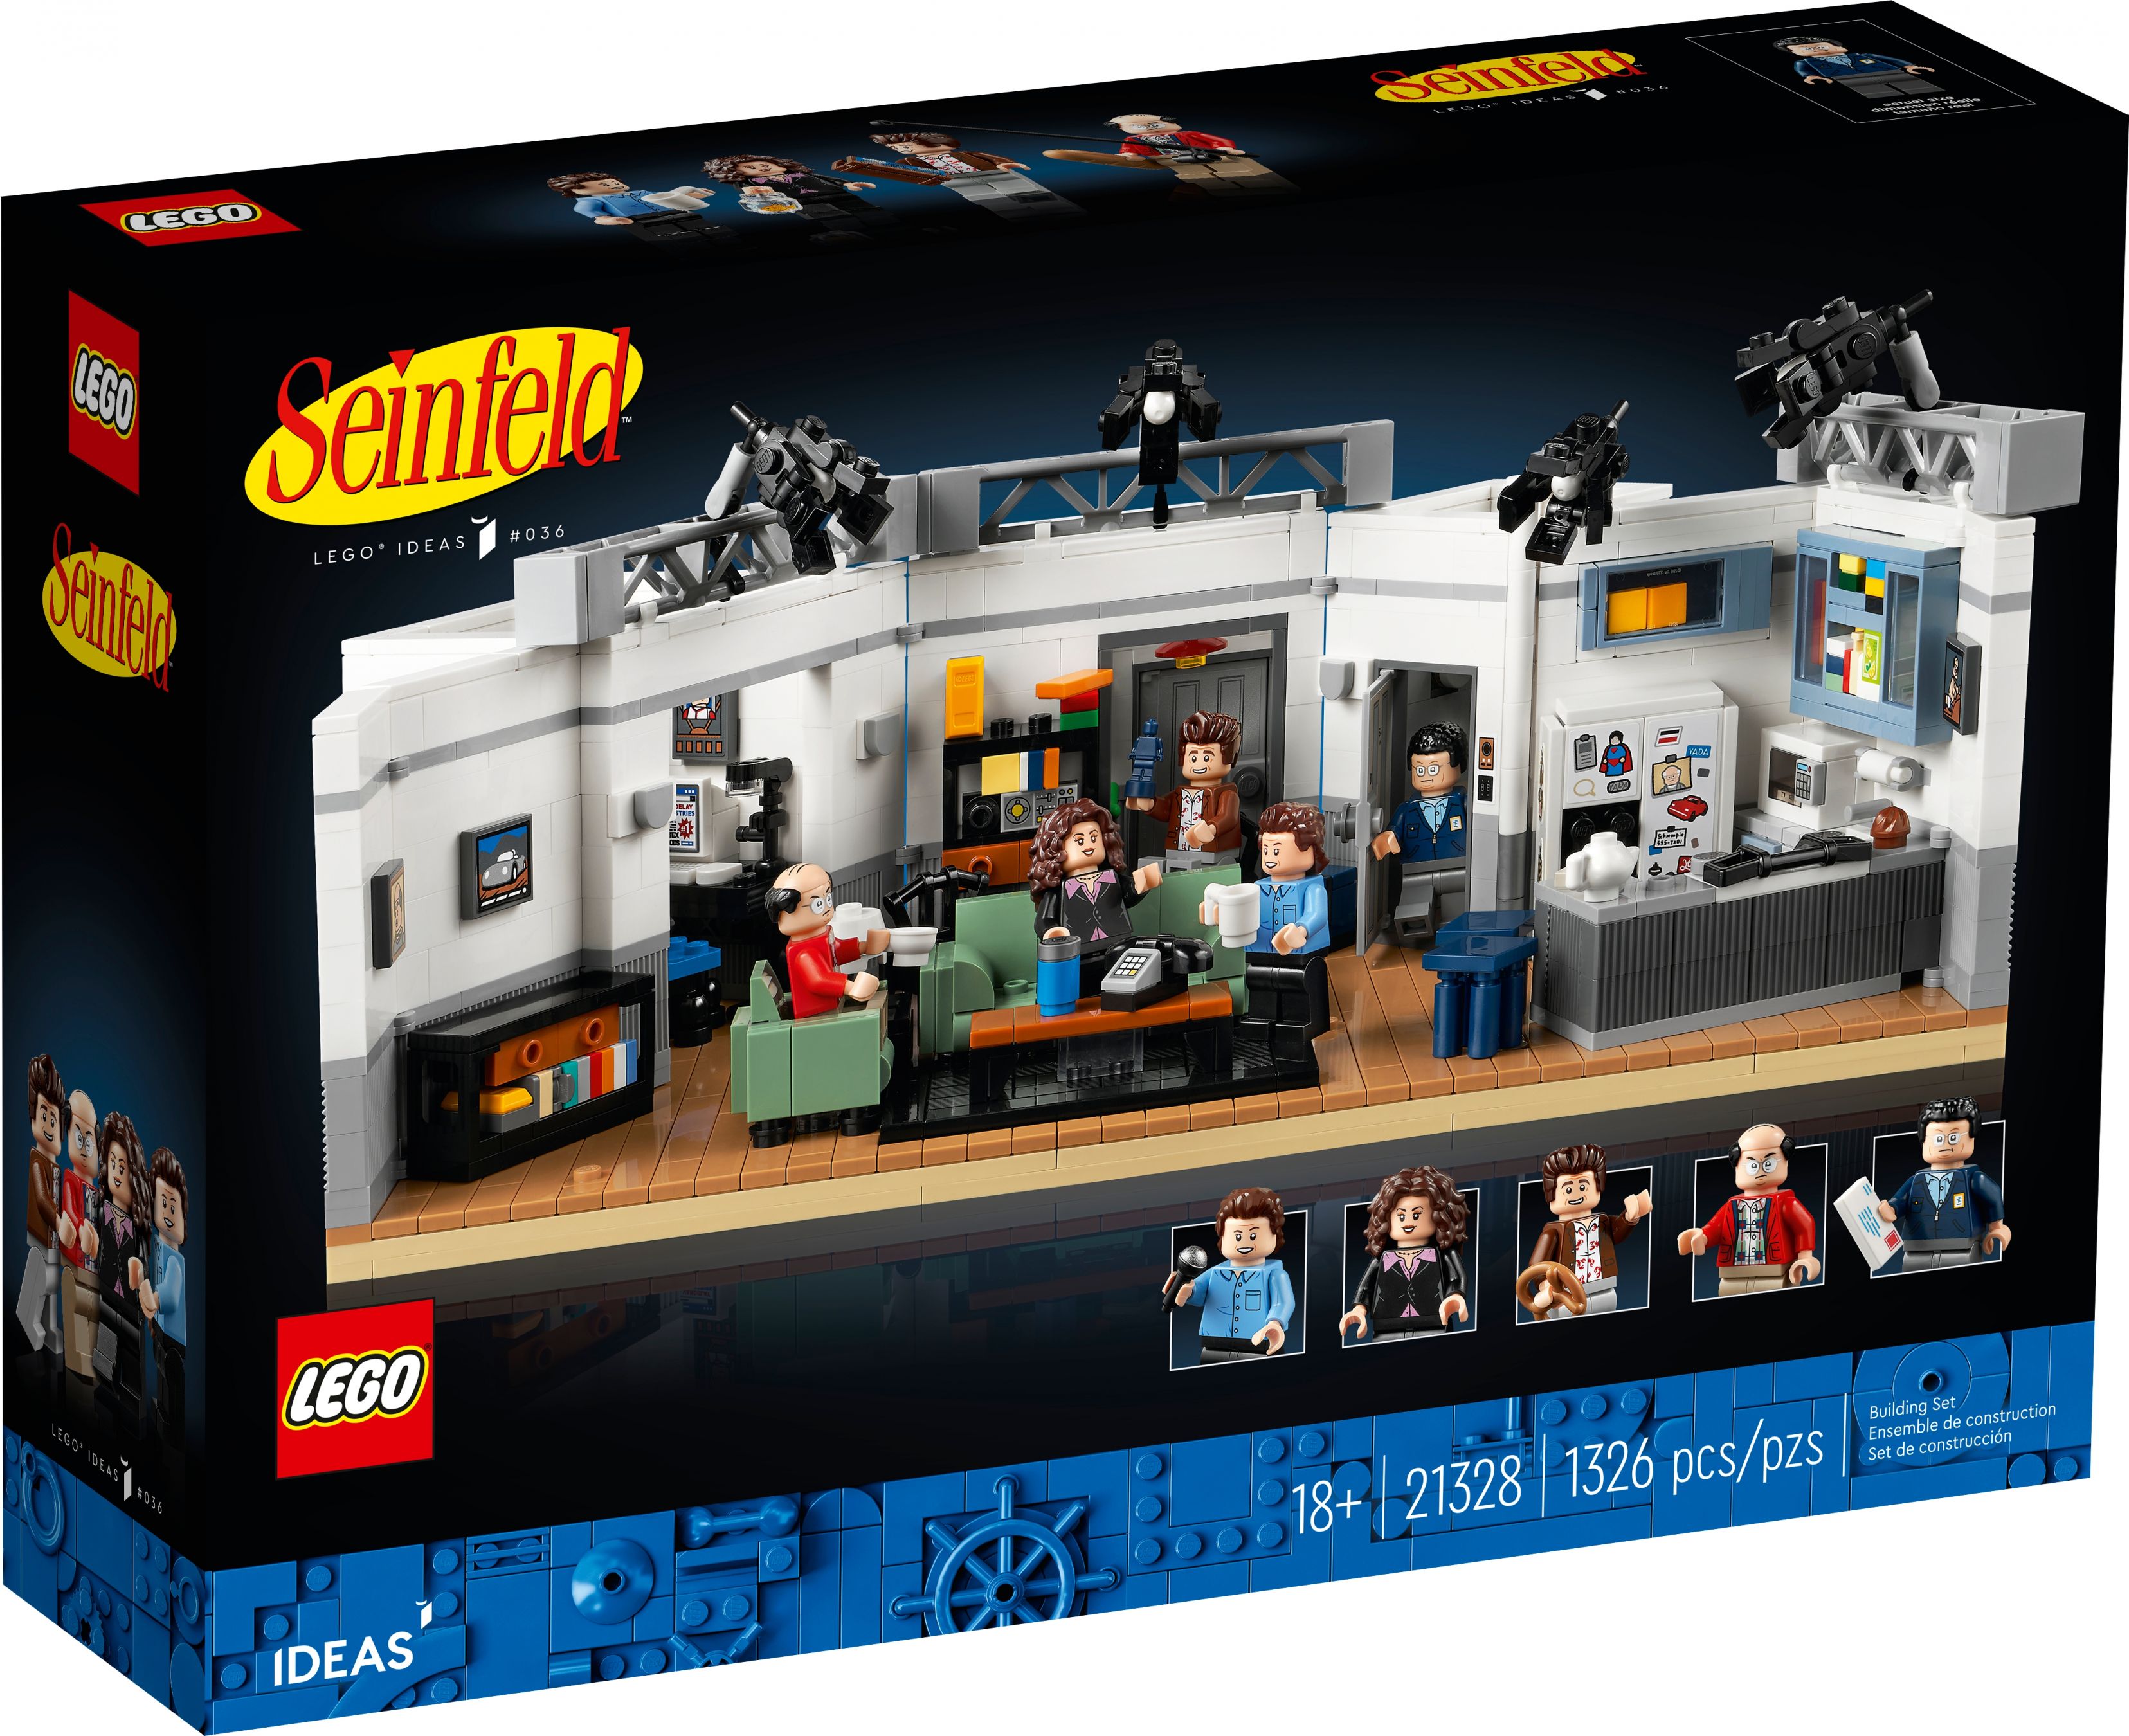 LEGO Ideas 21328 Seinfeld LEGO_21328_alt1.jpg